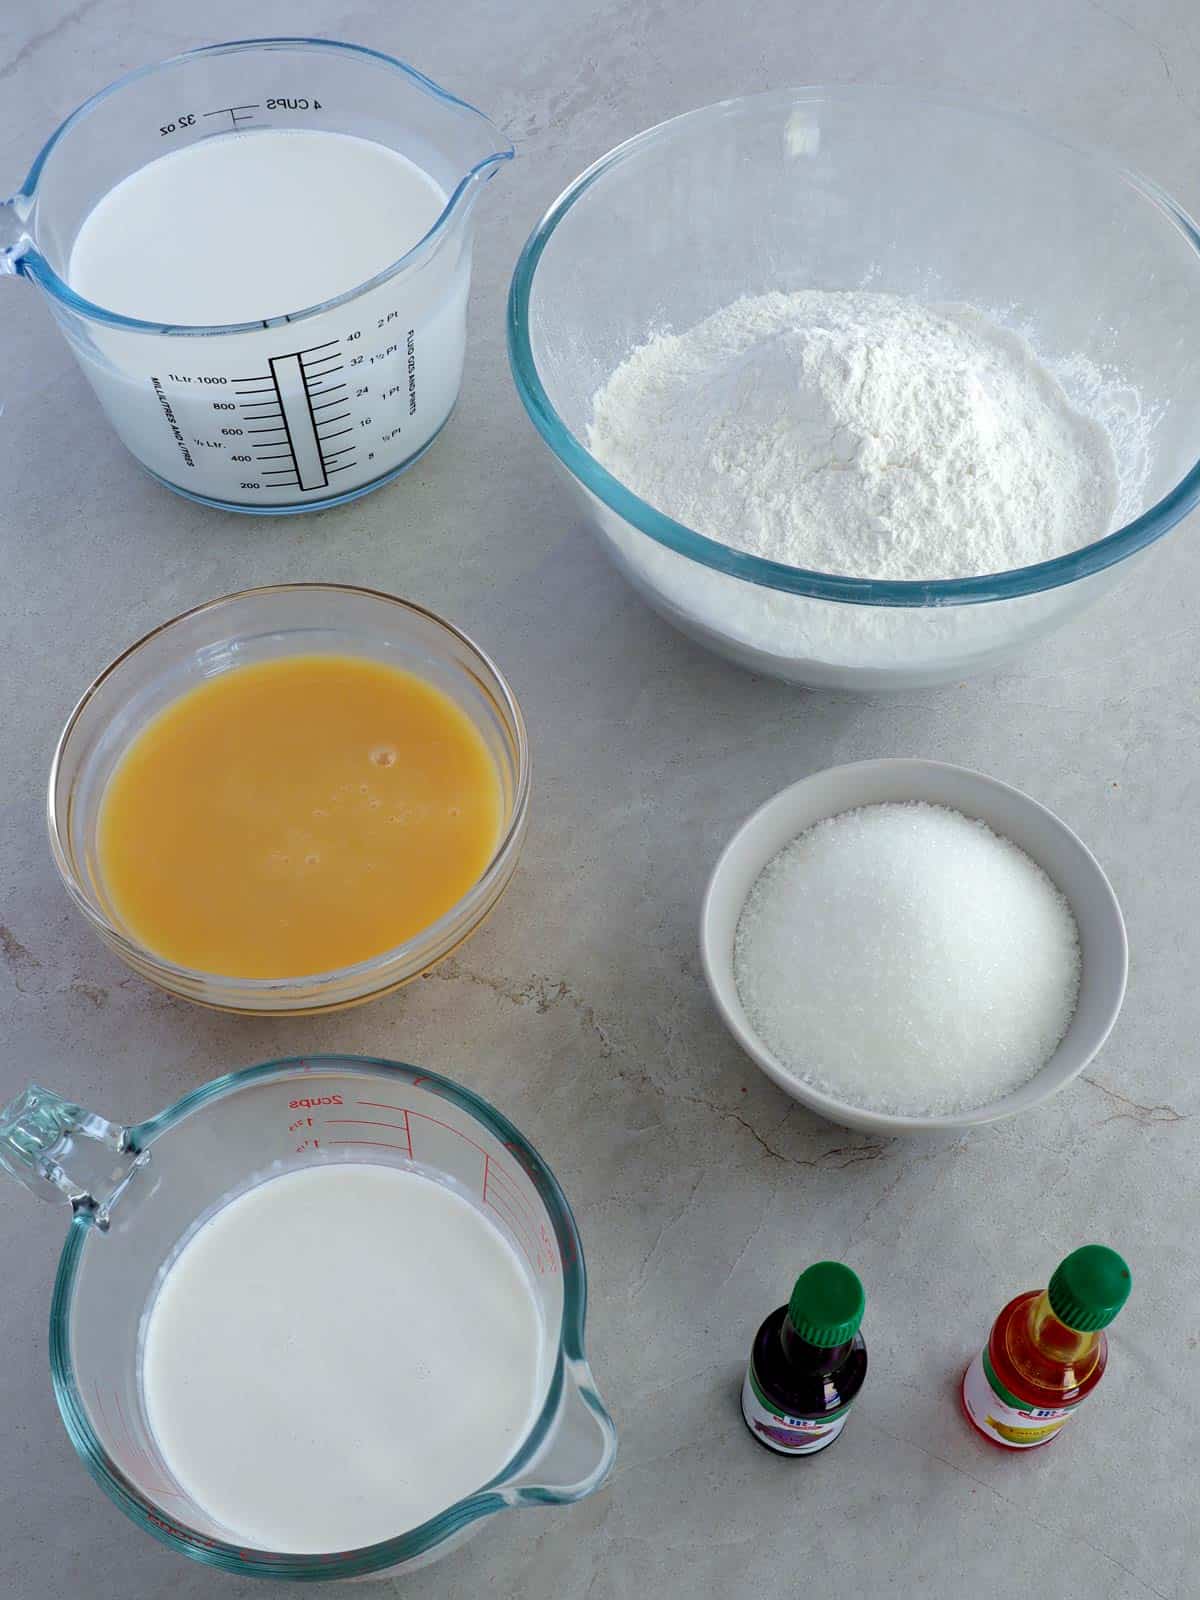 glutinous rice flour, condensed milk, coconut milk, coconut cream, sugar, flavor extracts in bowls.